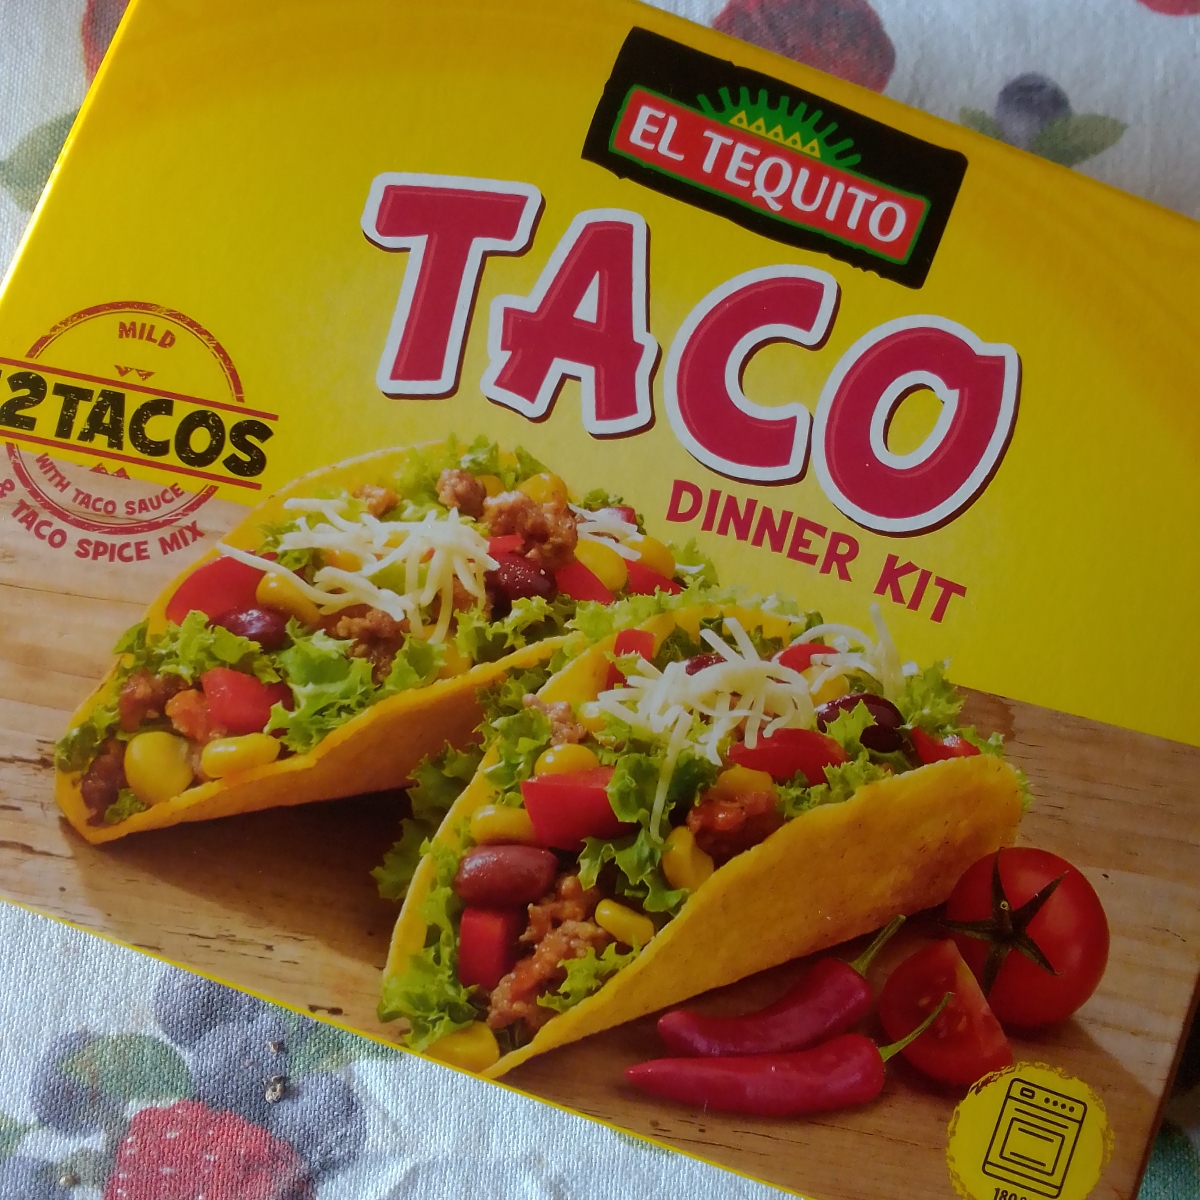 Taco | Kit Tequito Review abillion Dinner El